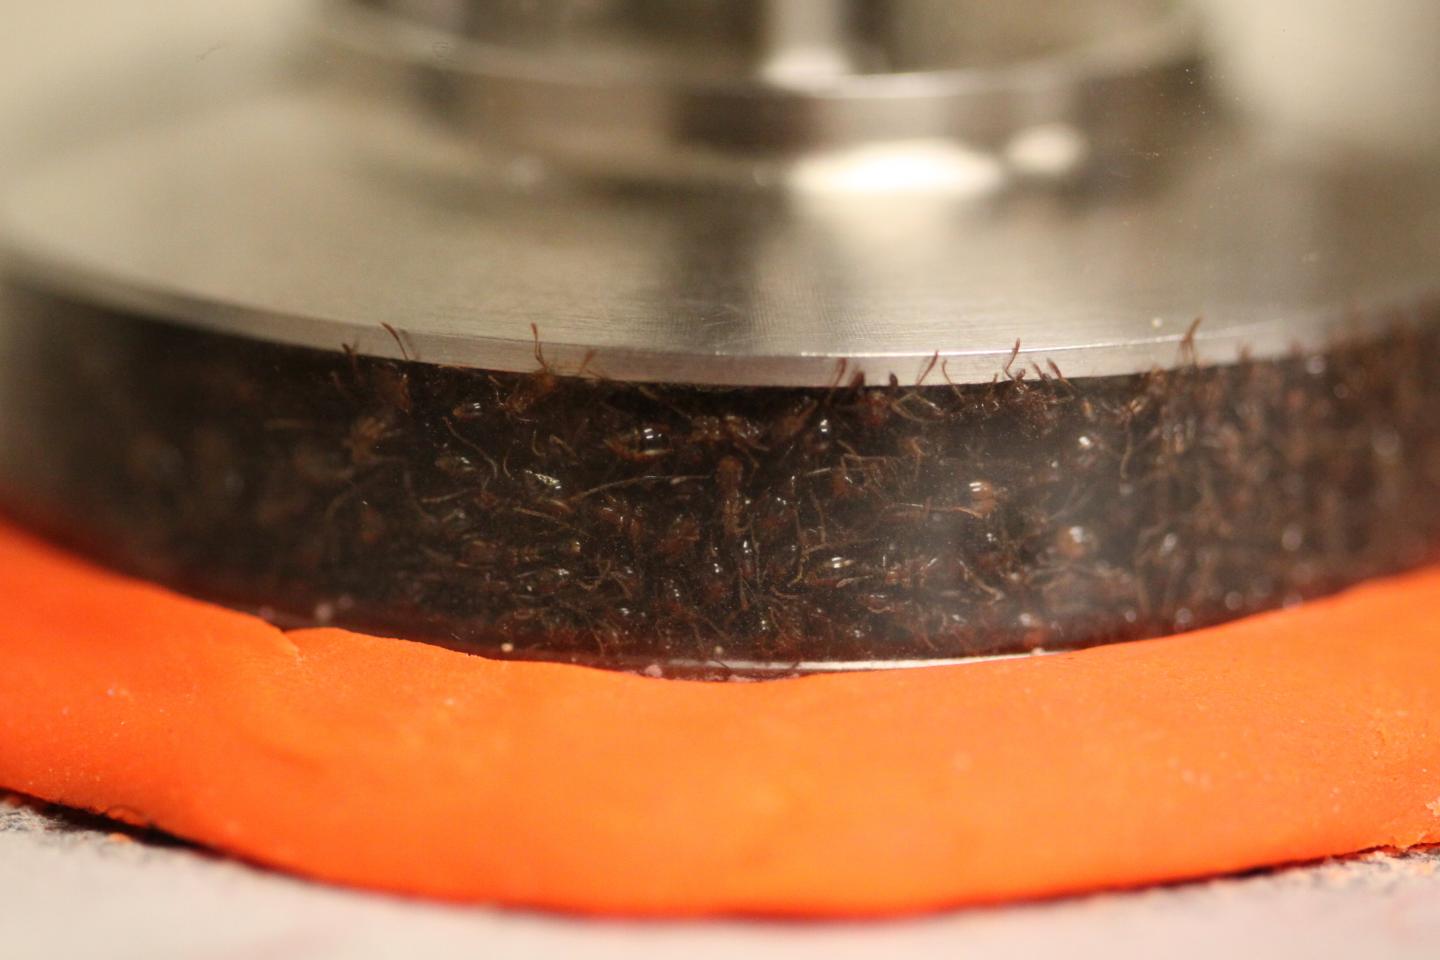 Ants in Rheometer